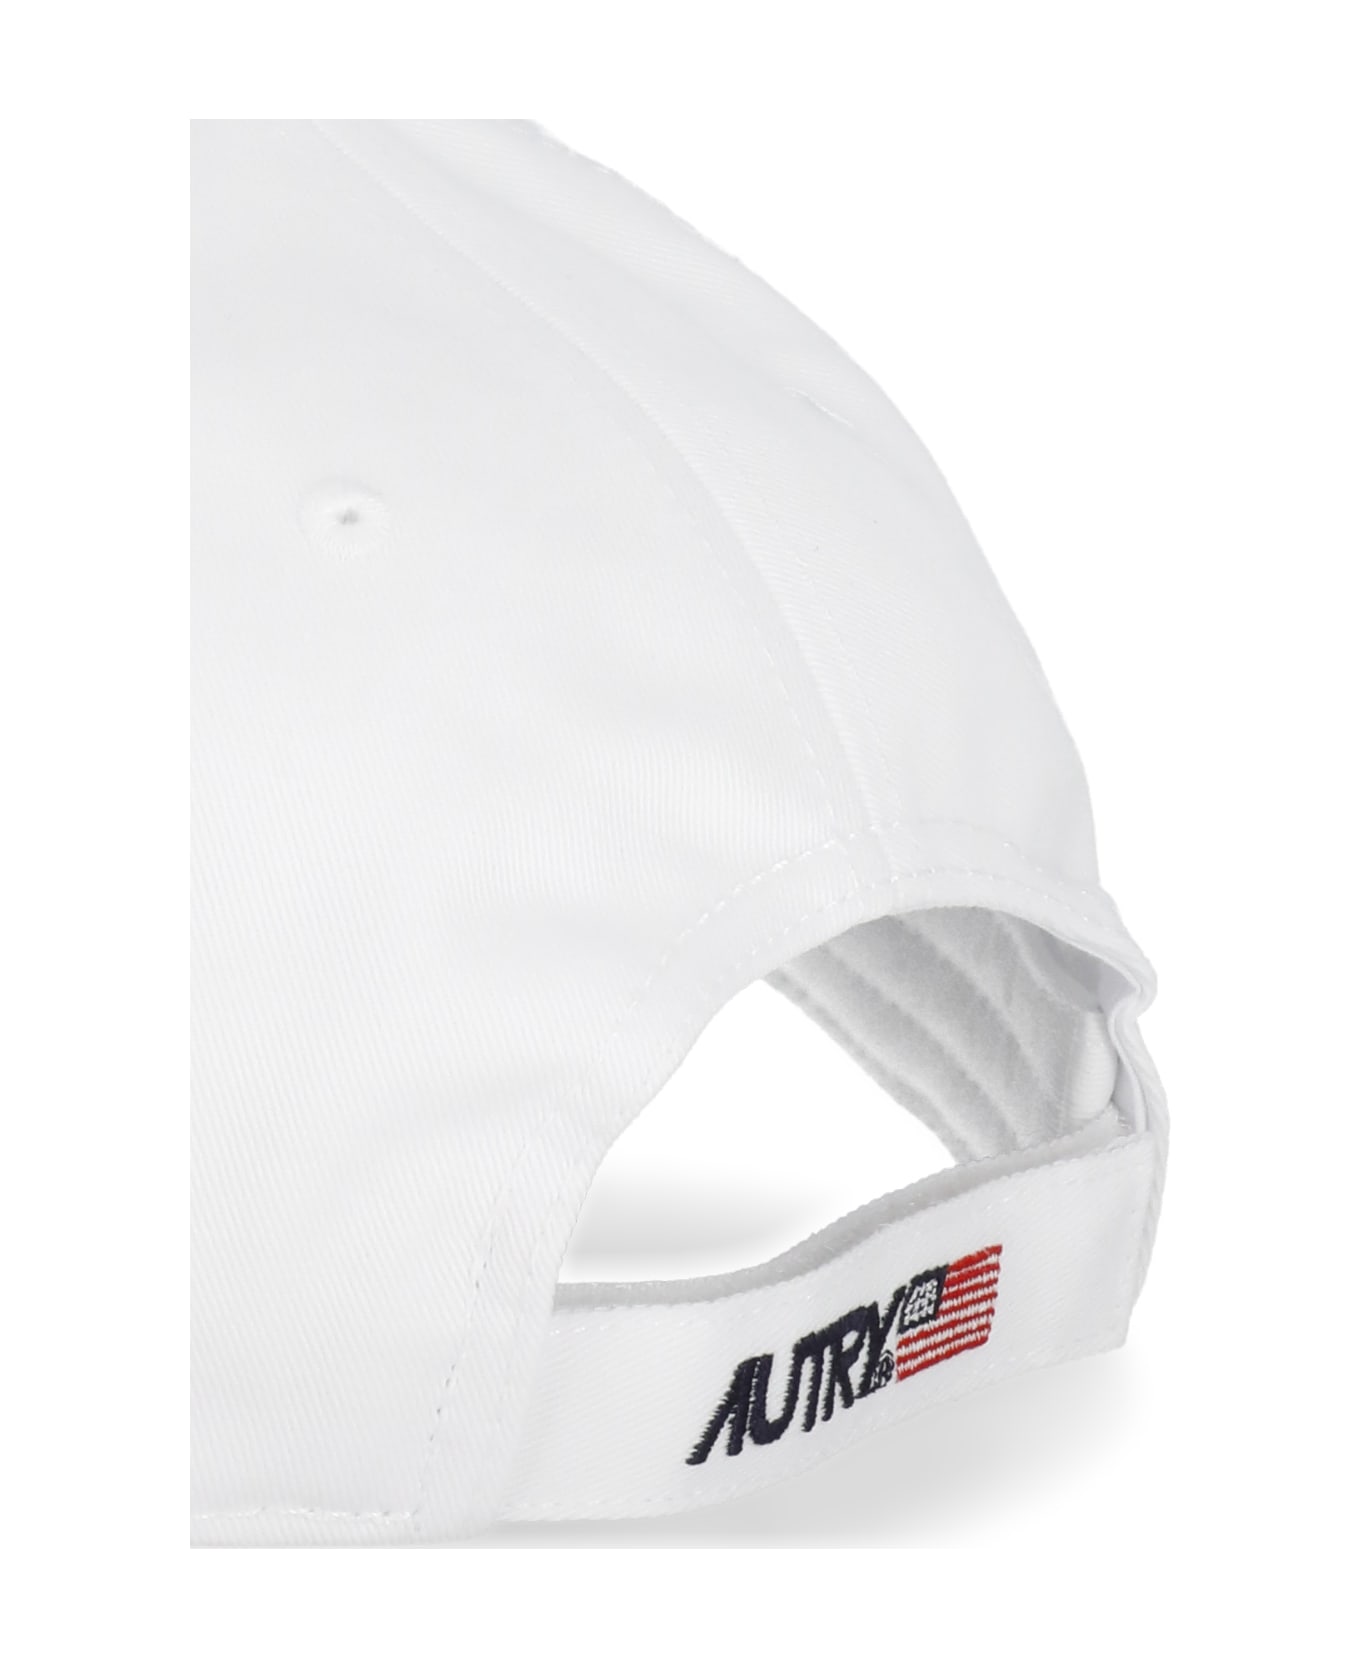 Autry Bob Lutz Baseball Hat - White 帽子